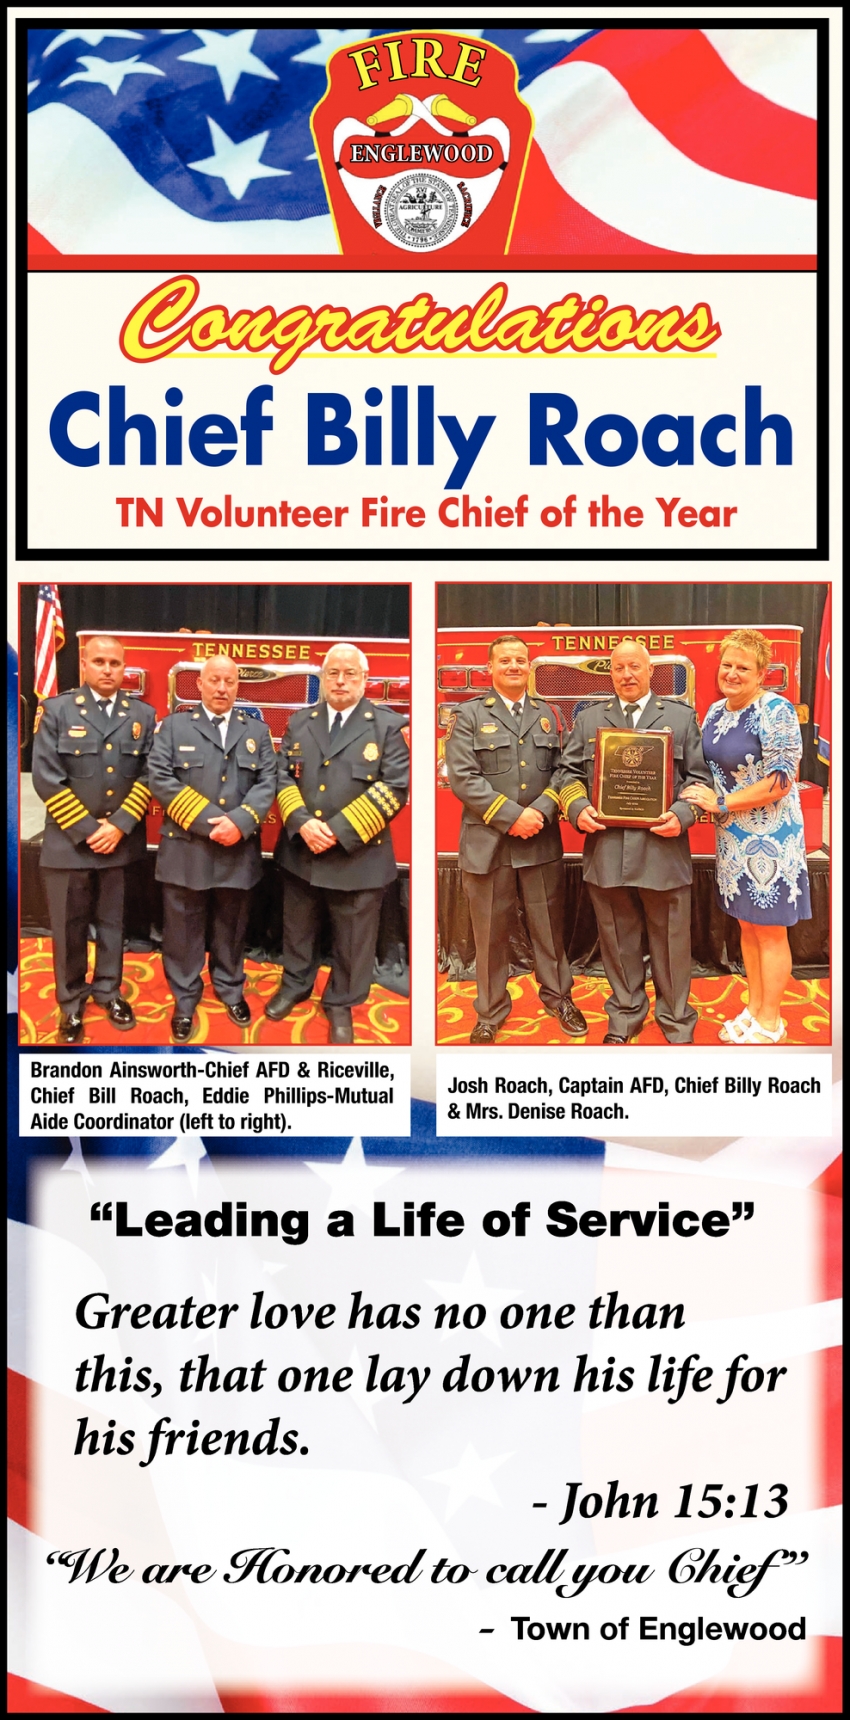 Congratulations Chief Billy Roach